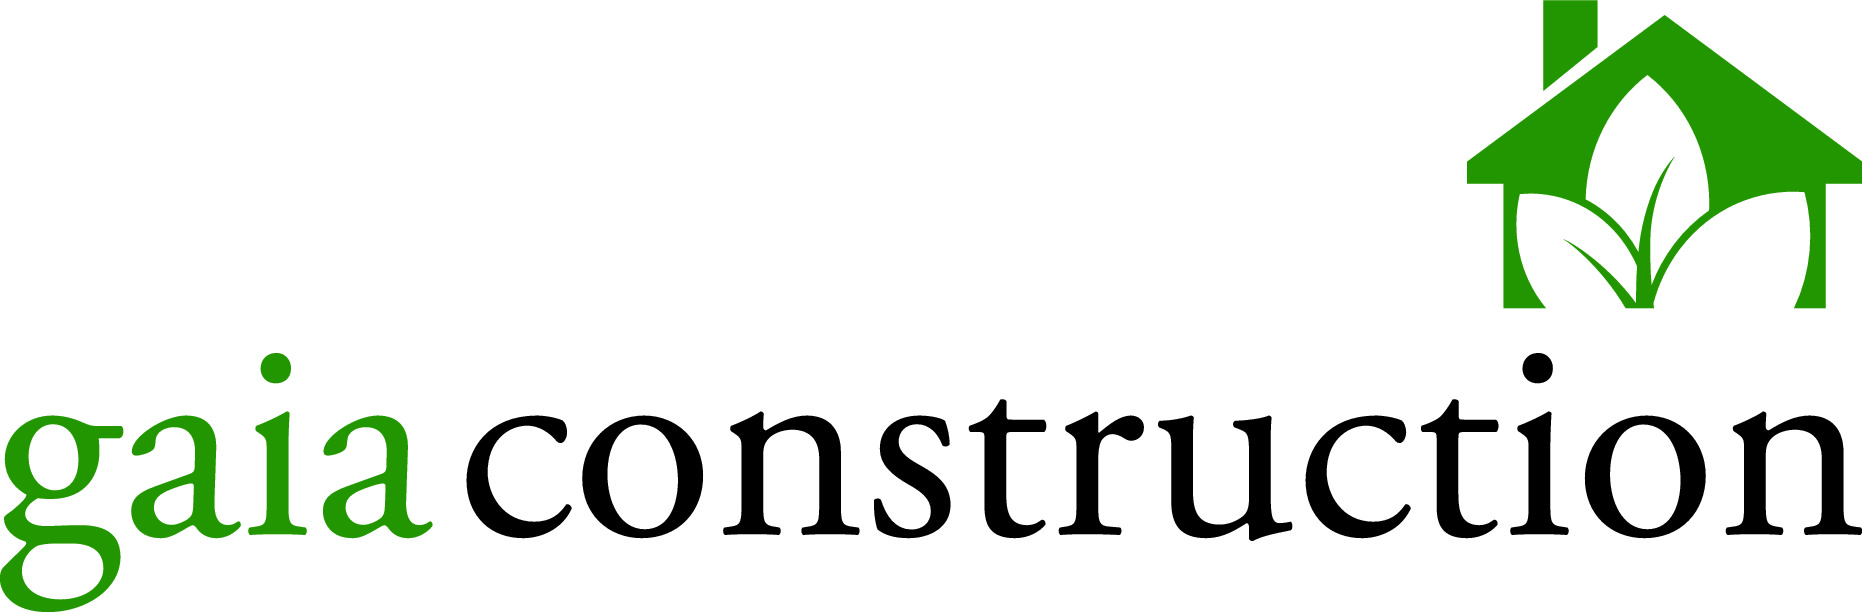 Gaia-Construction-Logo_FIANL-Copy